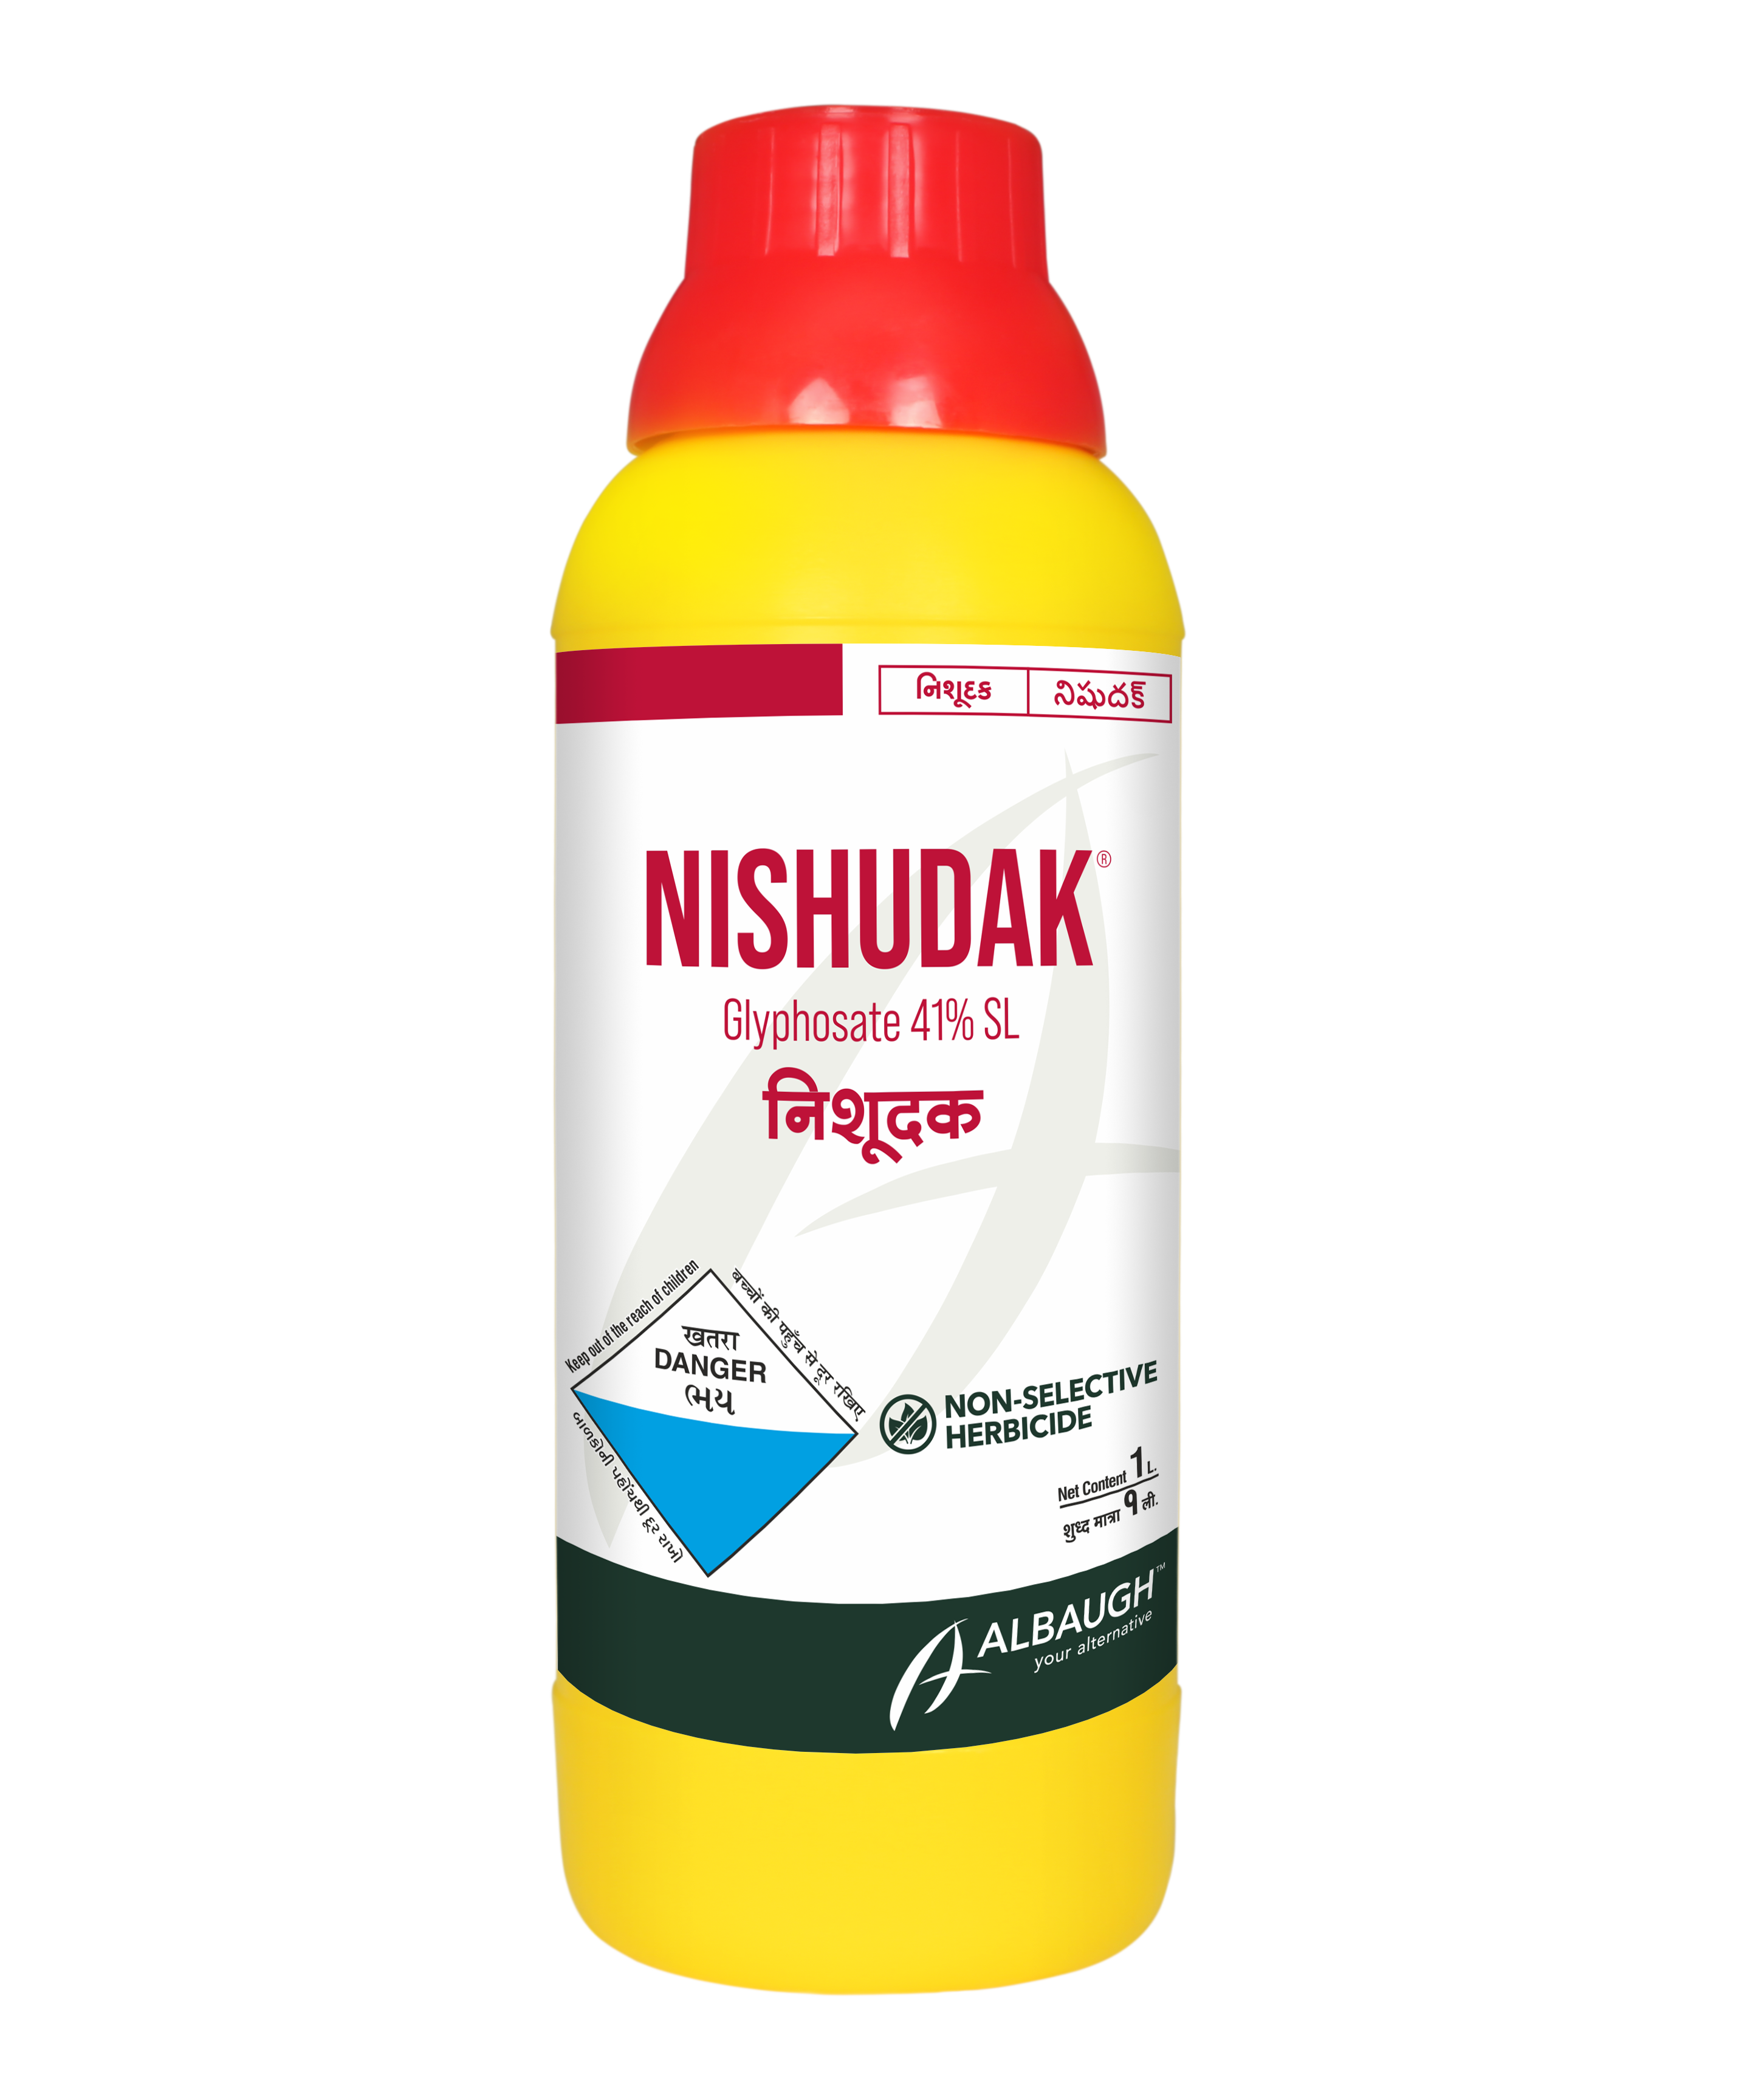 Nishudak: Glyphosate 41% SL